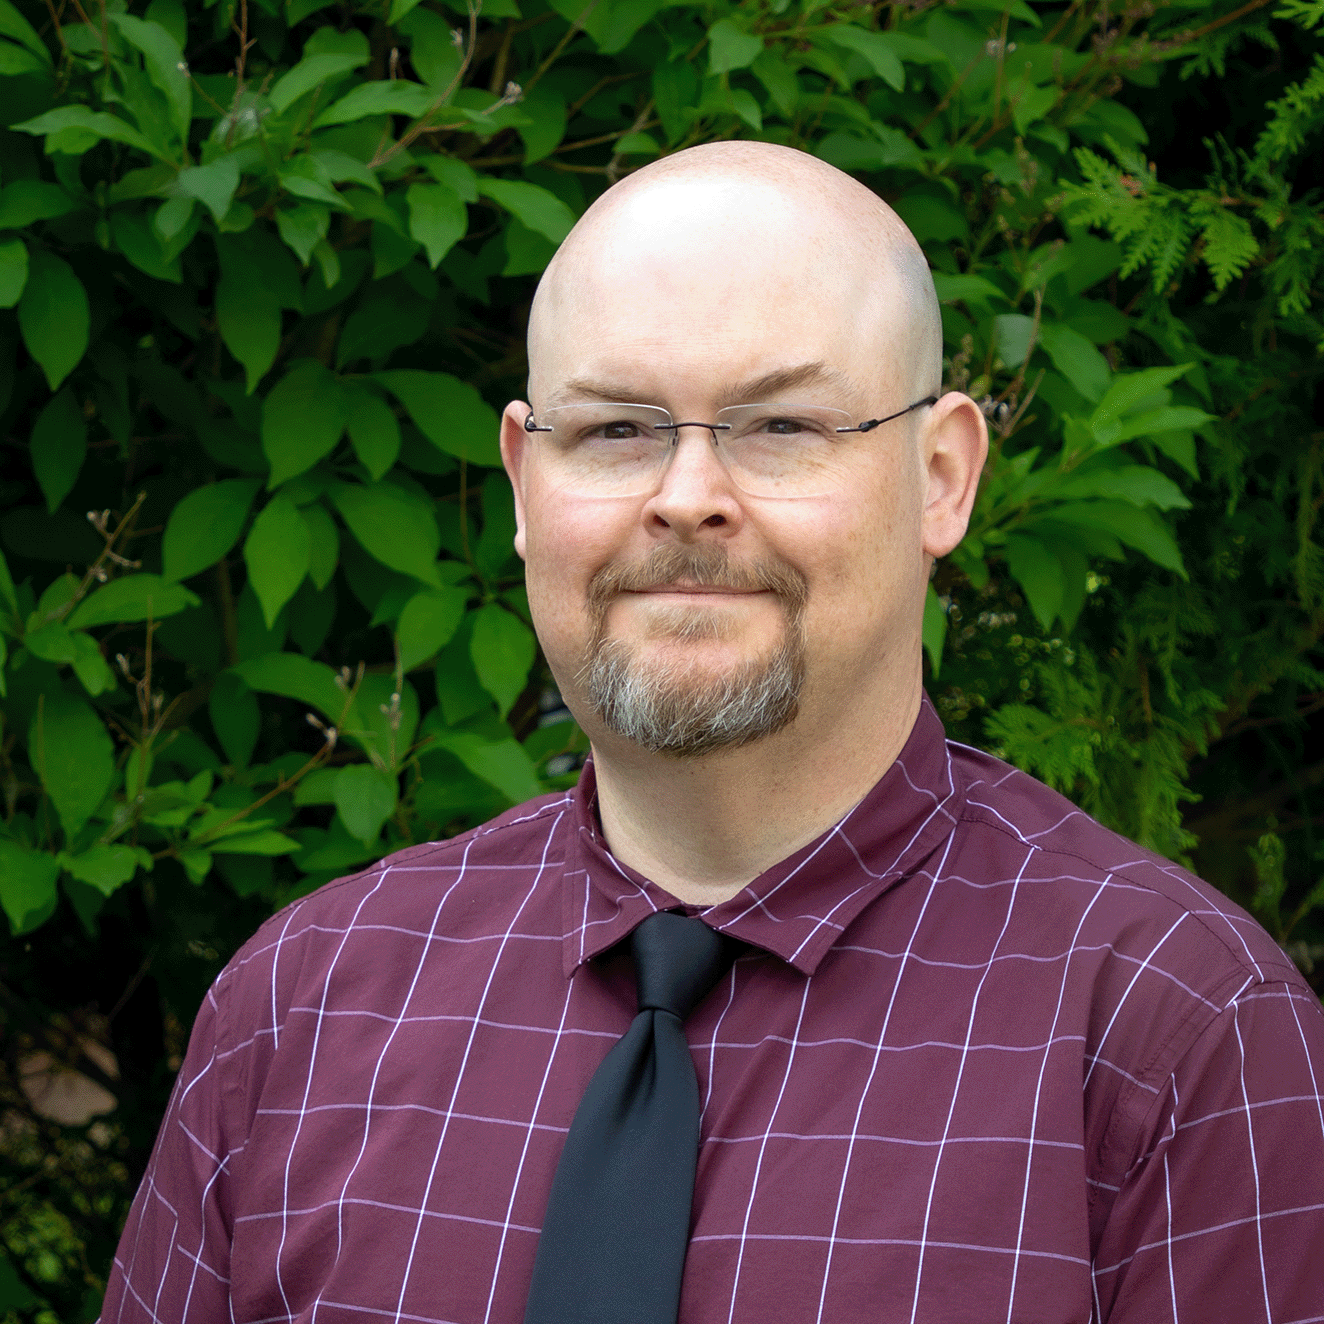 headshot of bald man with beard wearing a dark purple shirt and dark tie